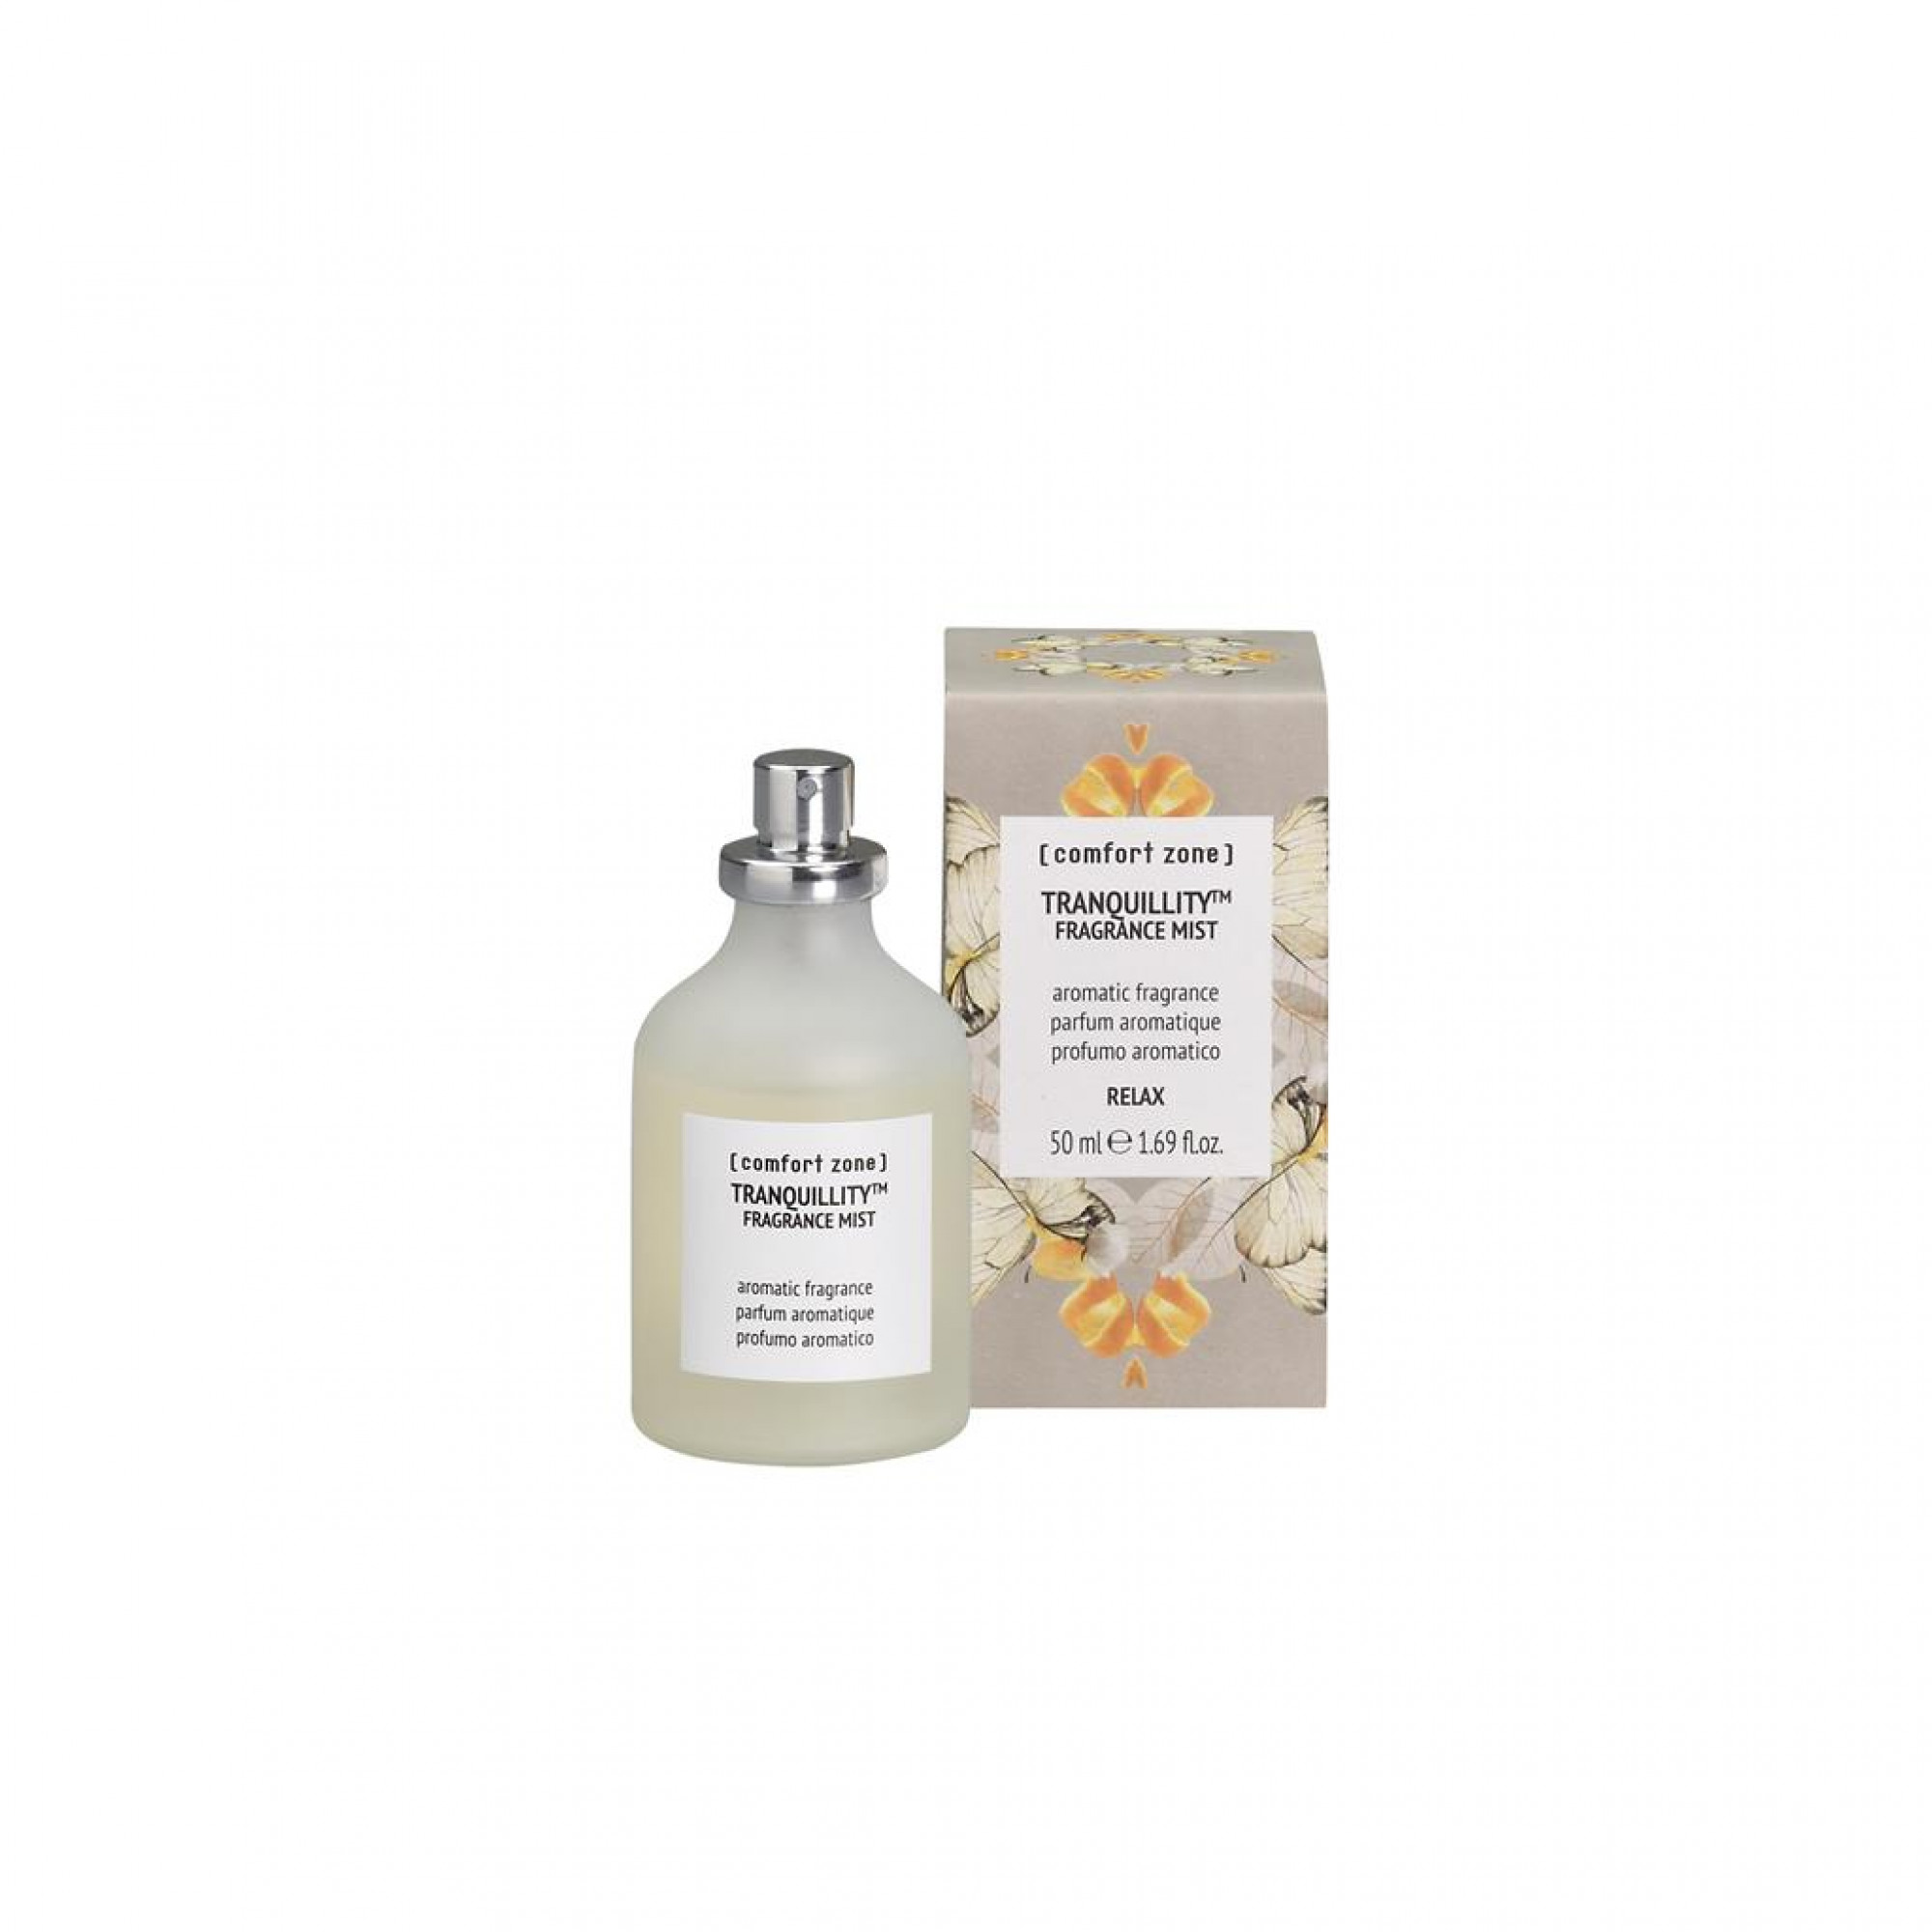 Tranquillity Fragrance Mist 50 ml - Comfort zone - Offerta 19,00 €